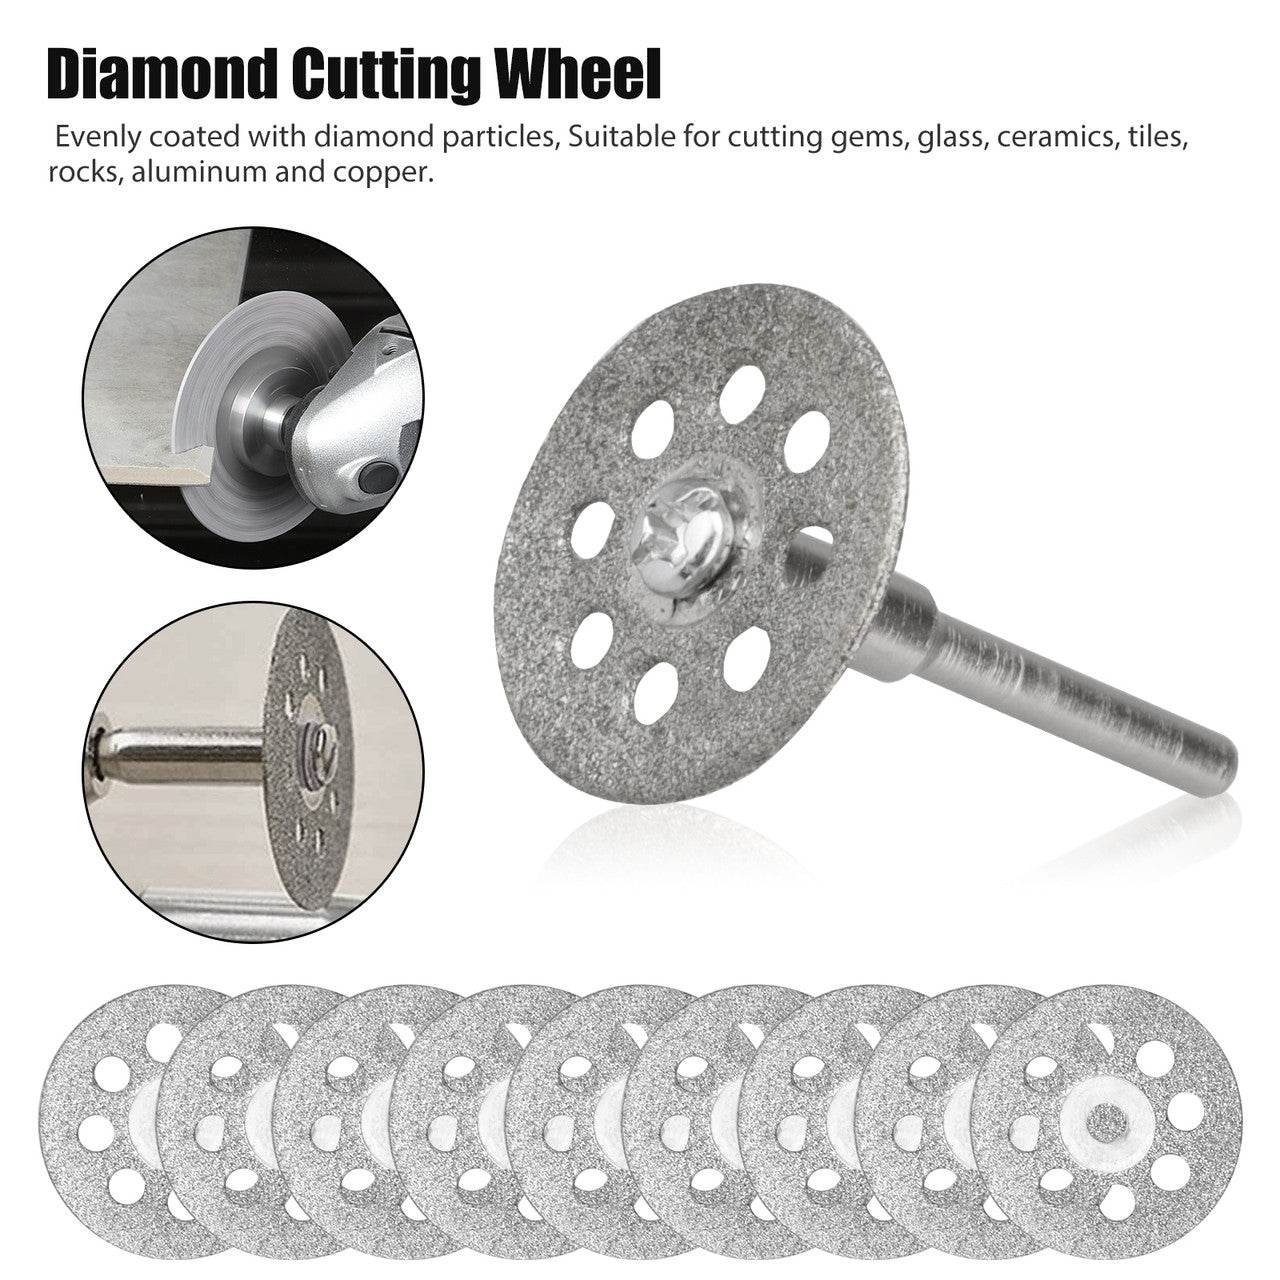 Rotary Grinding Bit Set, 10PCS Diamond Cutting Wheel (22mm) + 20pcs Diamond Grinding Burr Drill Bits Sets + 10PCS Abrasive Mounted Stone Grinding Wheels + 2PCS Mandrel Bits (3mm Mandrel), 42PCS